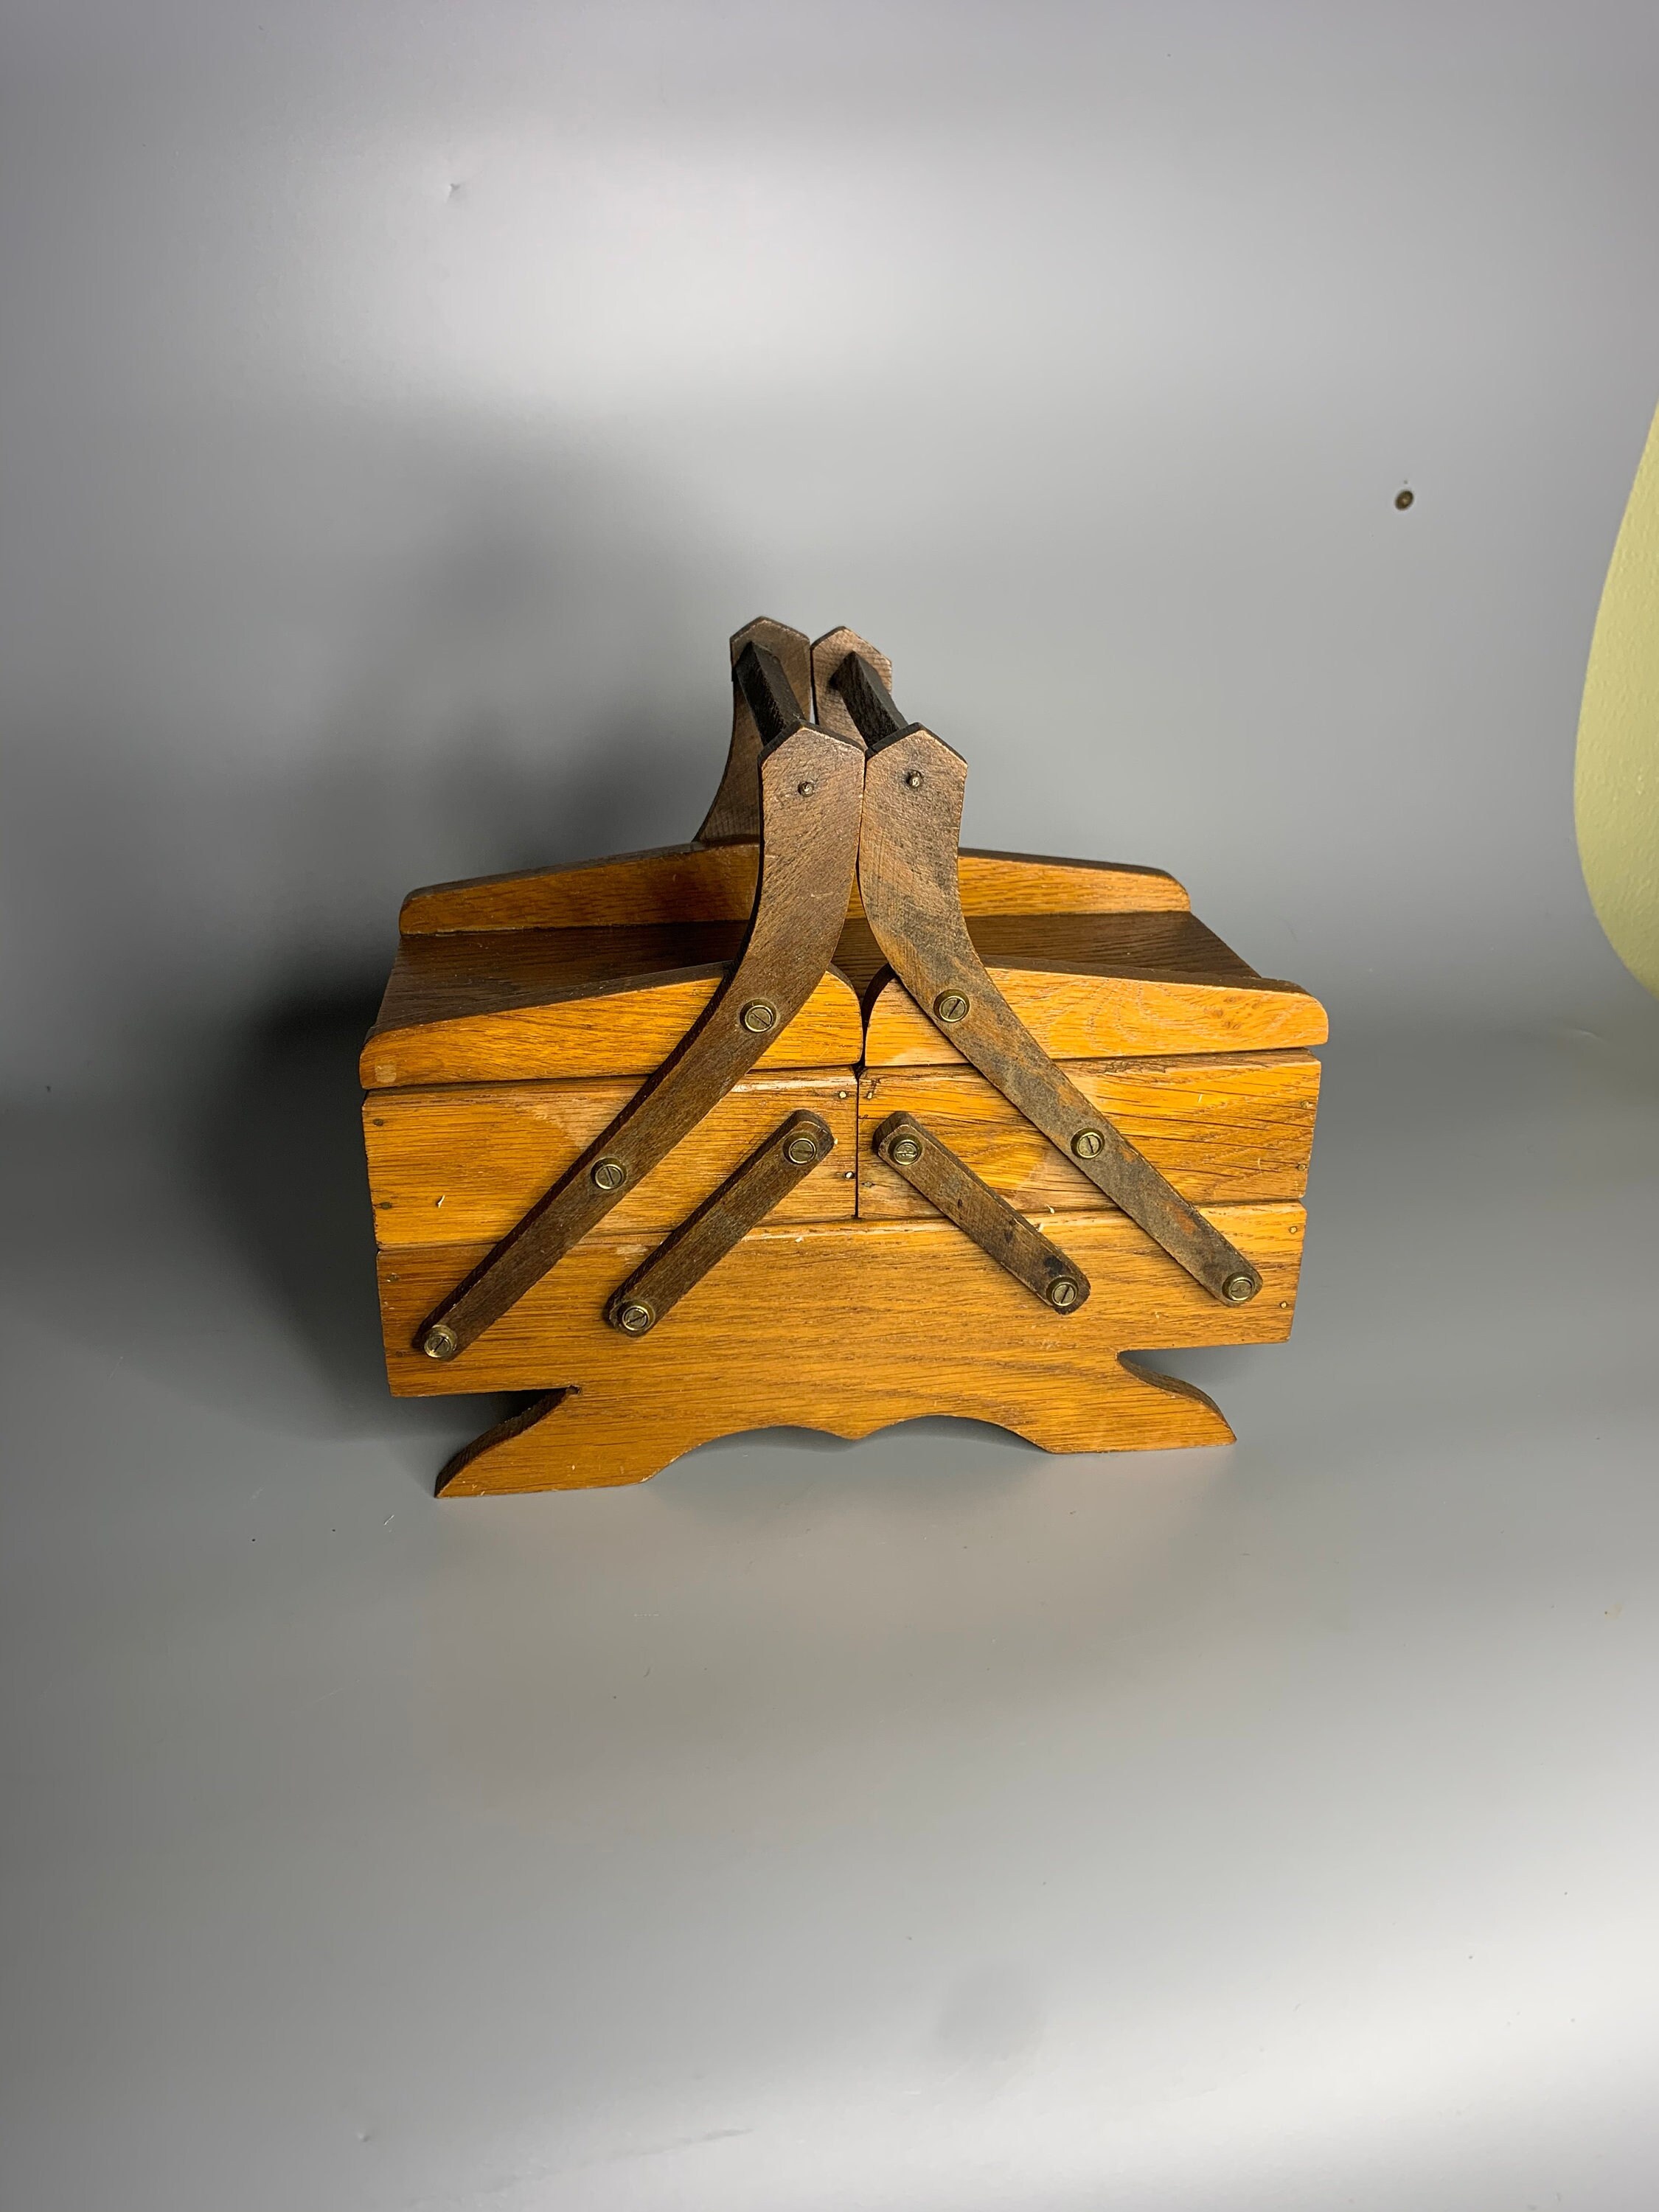 Sewing Box Wooden Box Carved Box Trinket Box Jewelry Box 